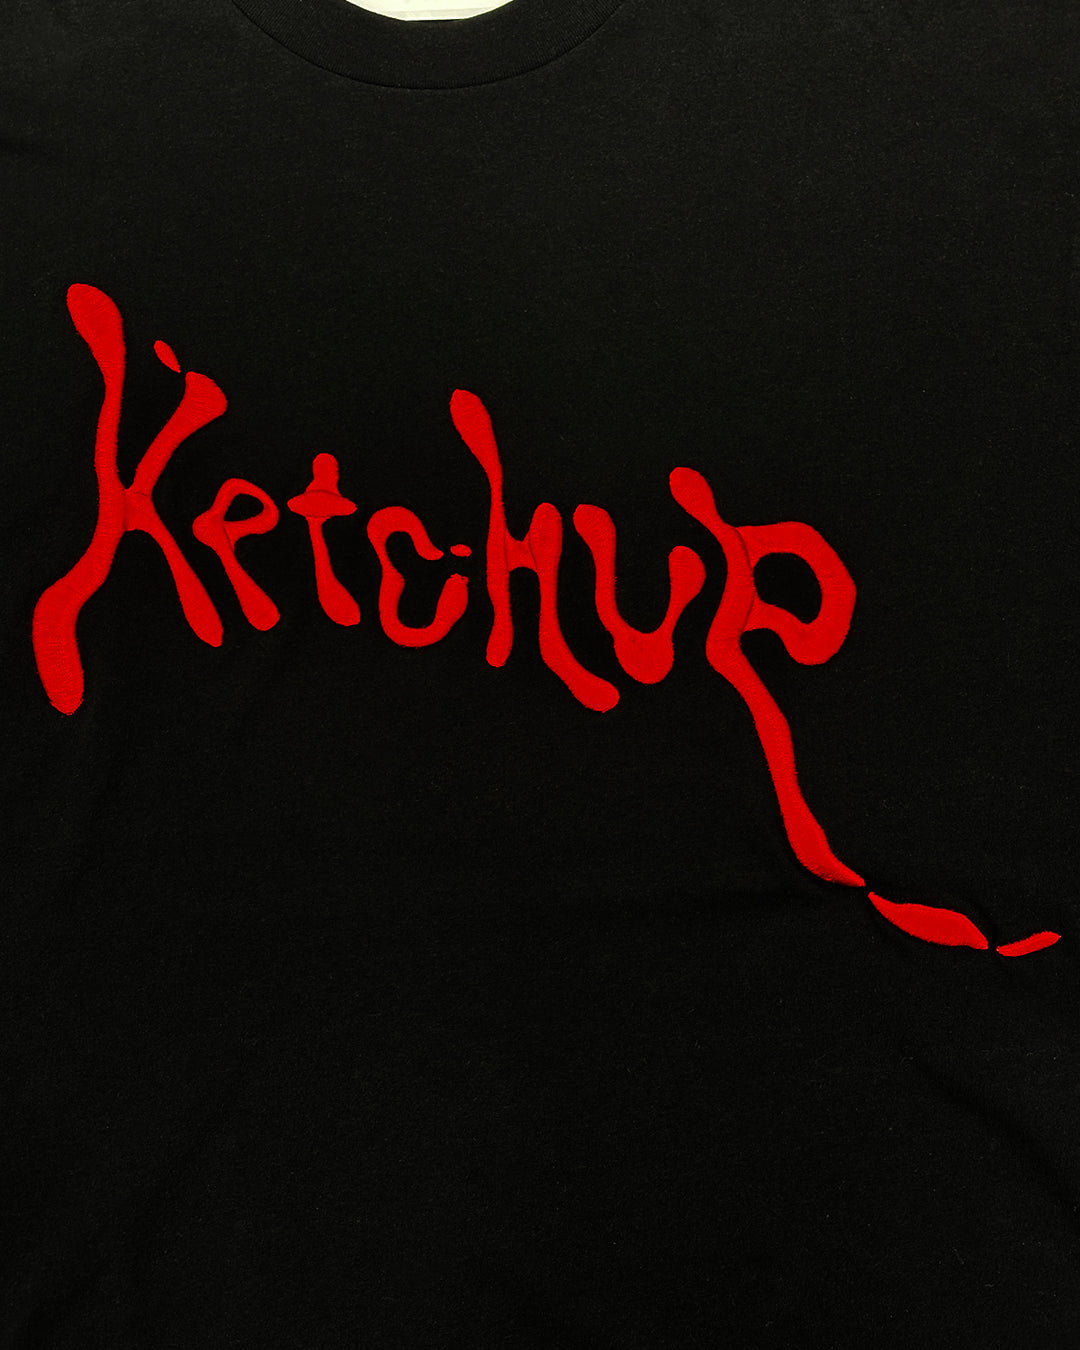 Take On Sleeve T-Shirts “Ketchup” / Black*Gray